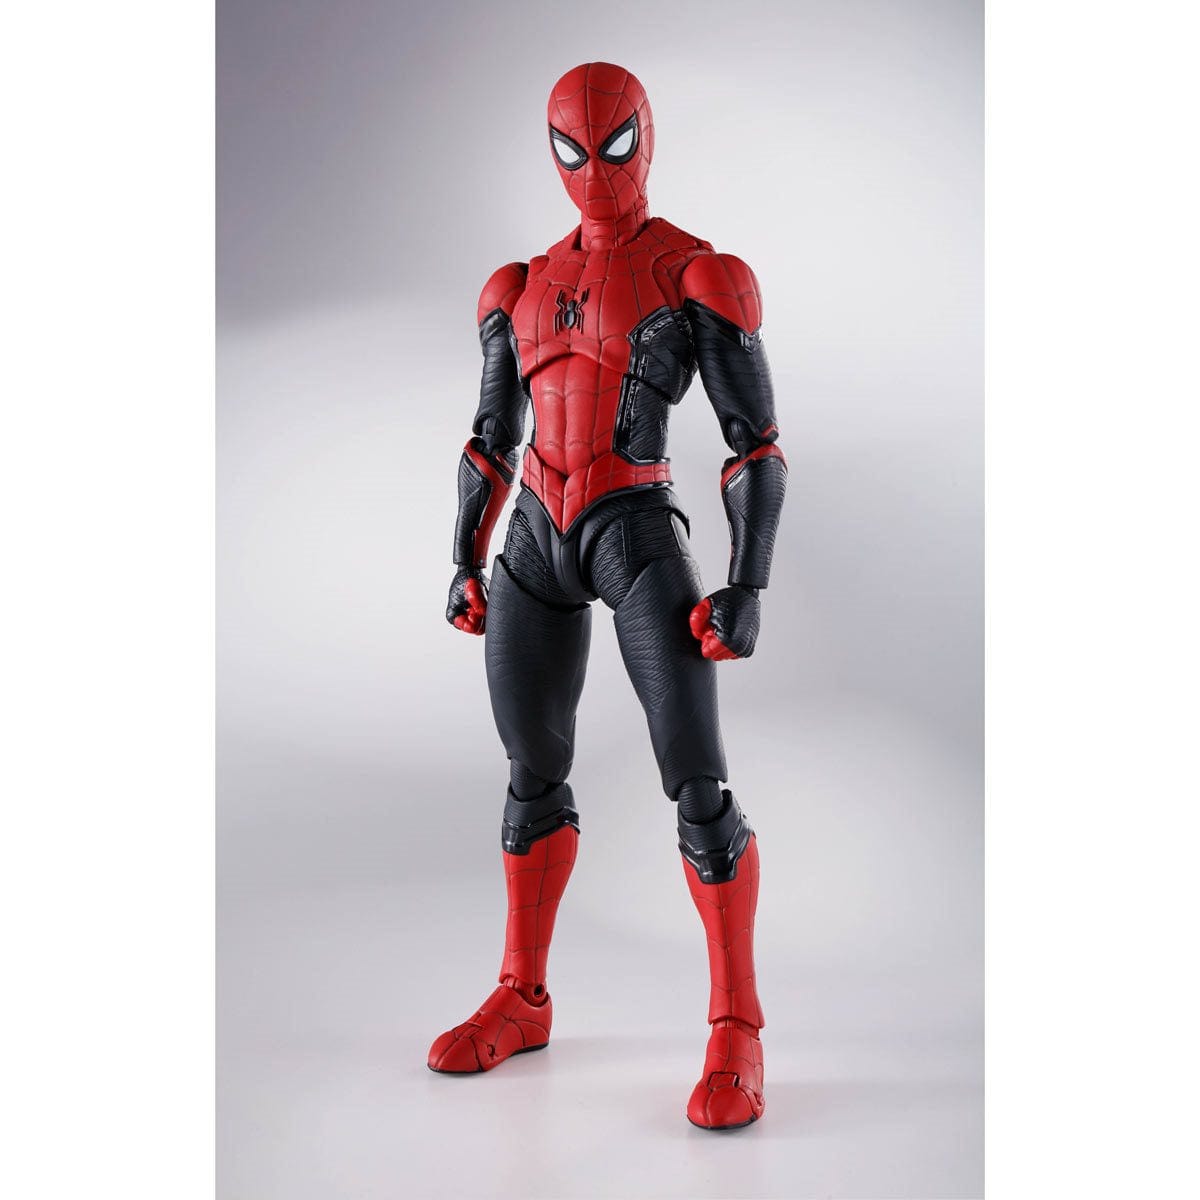 S.H.Figuarts Spider-Man Upgrade Suit (SPIDER-MAN: No Way Home) [BEST SELECTION]